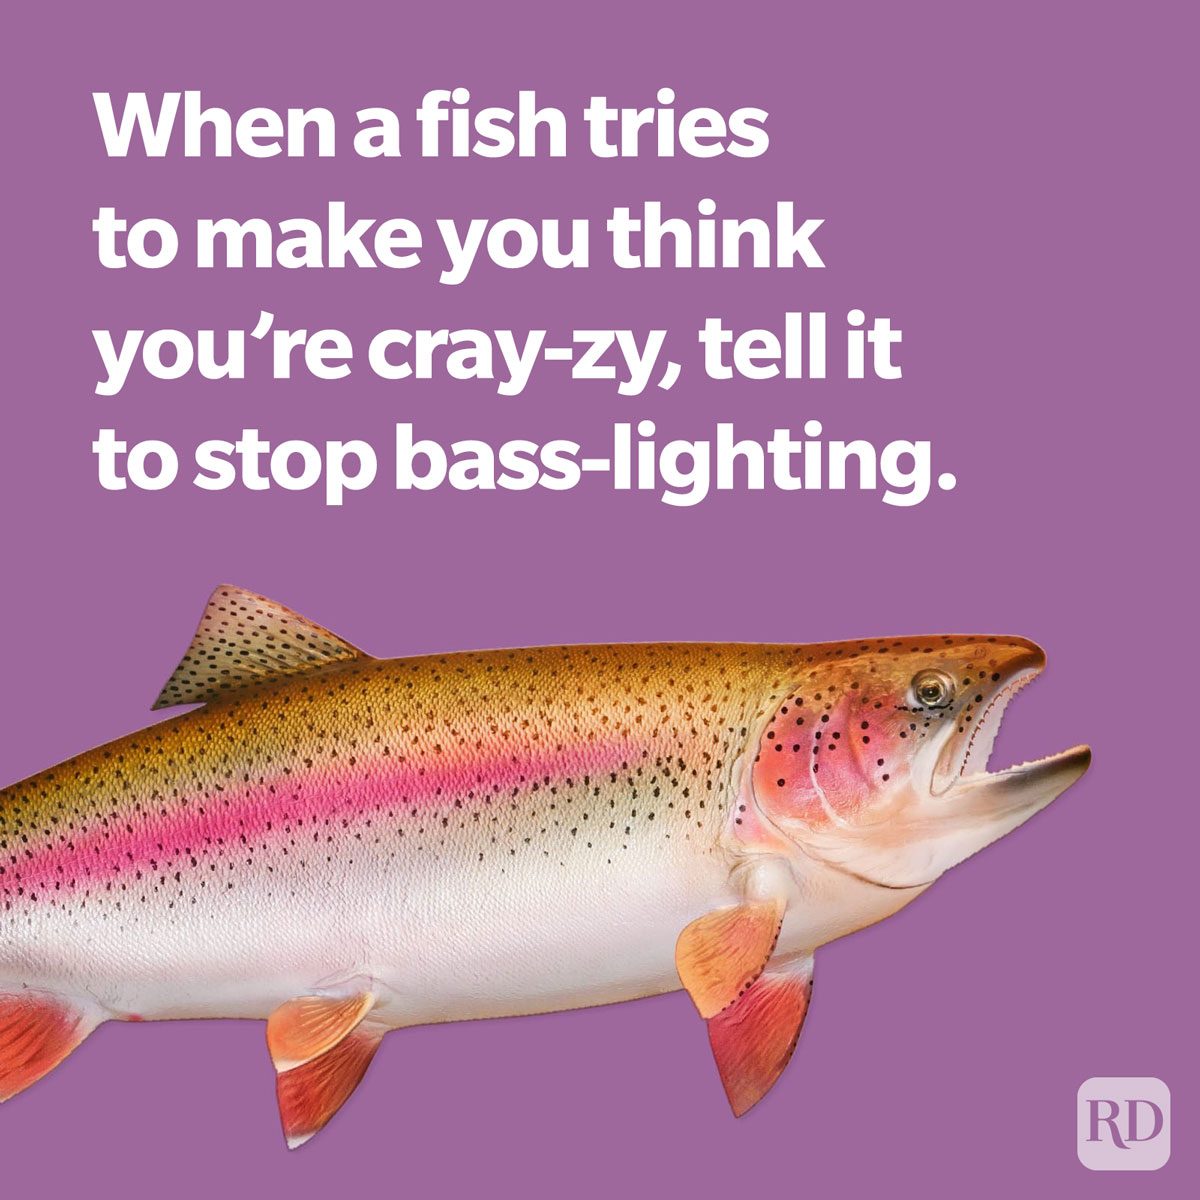 Fish pun about bass-lighting